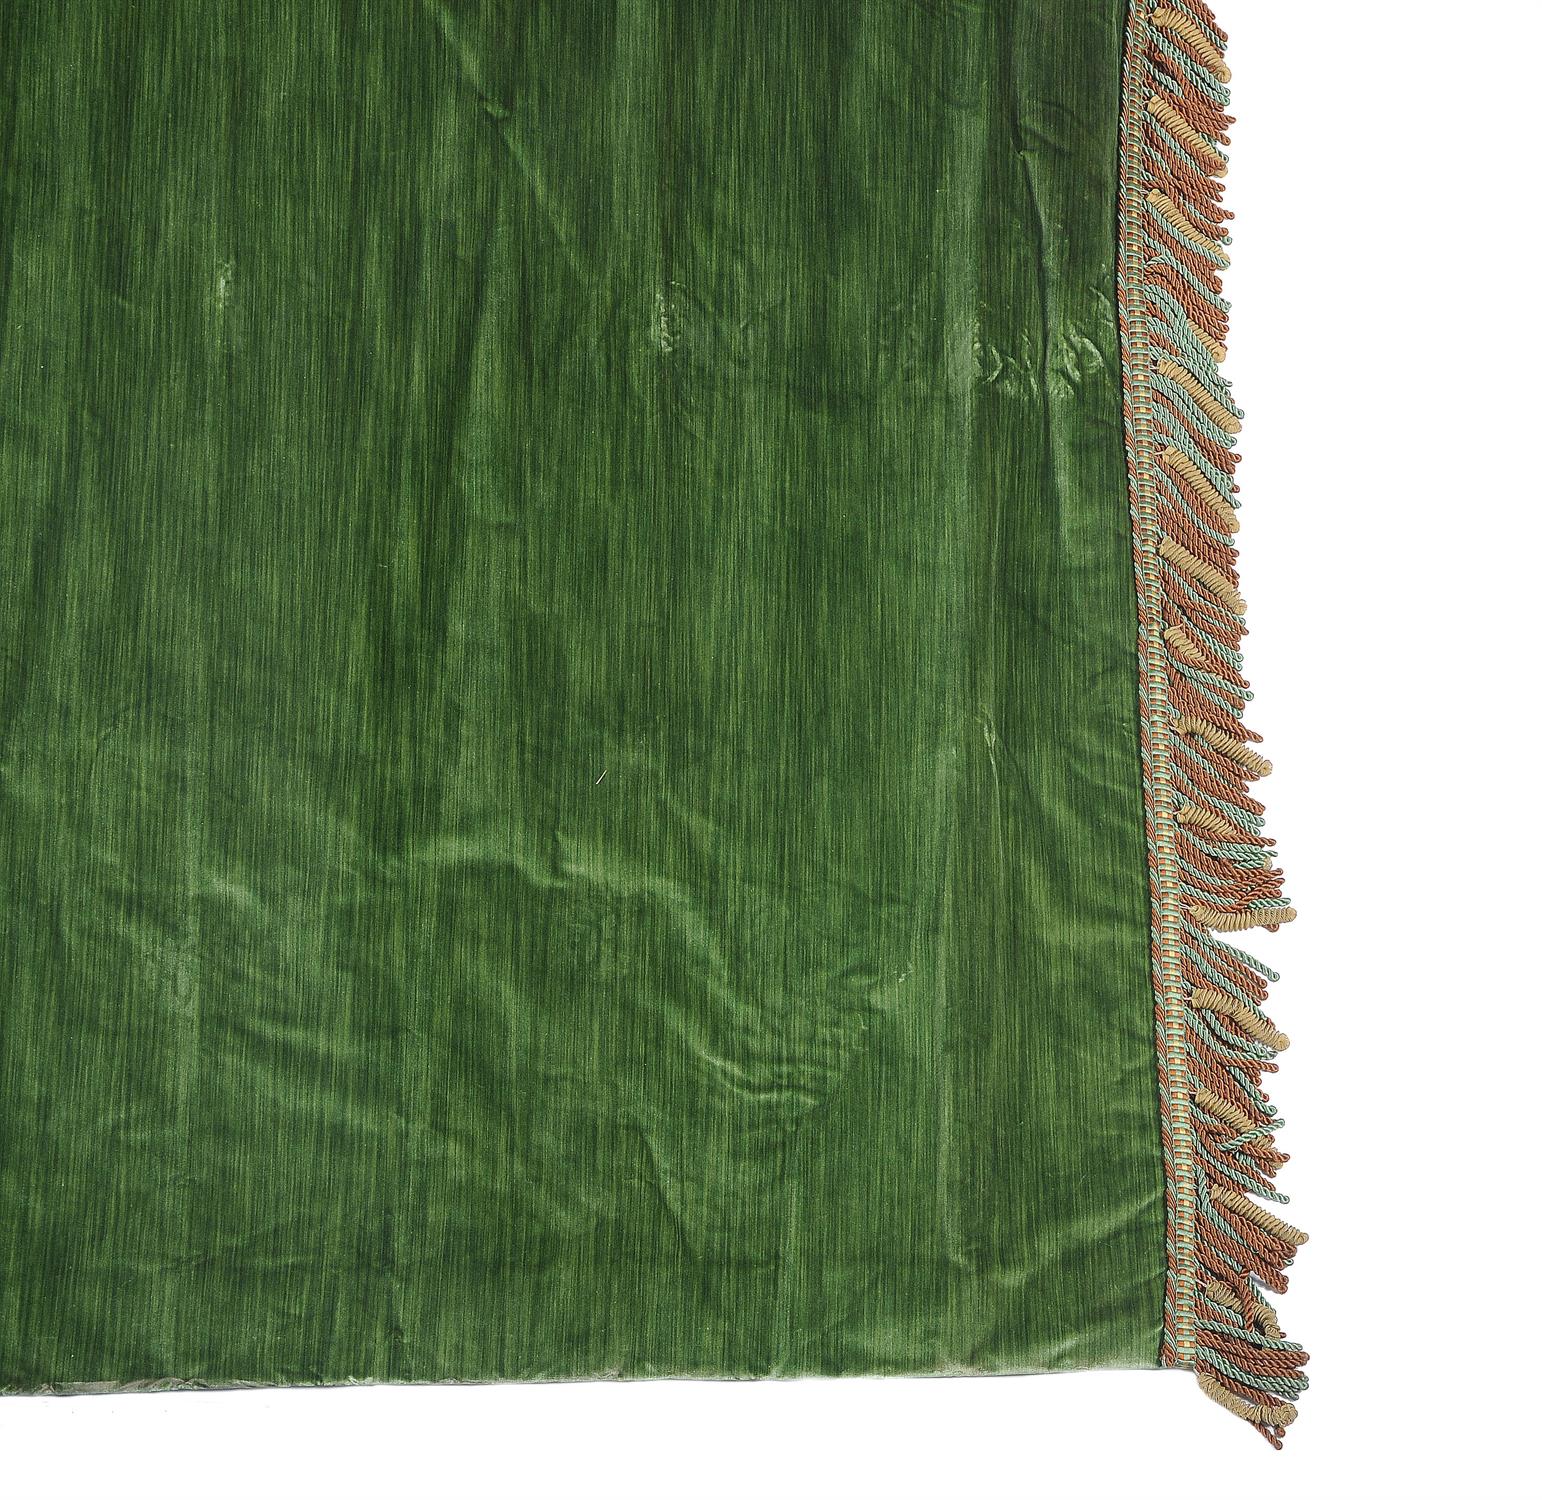 Two pairs of plain dark green velvet curtains - Image 2 of 2